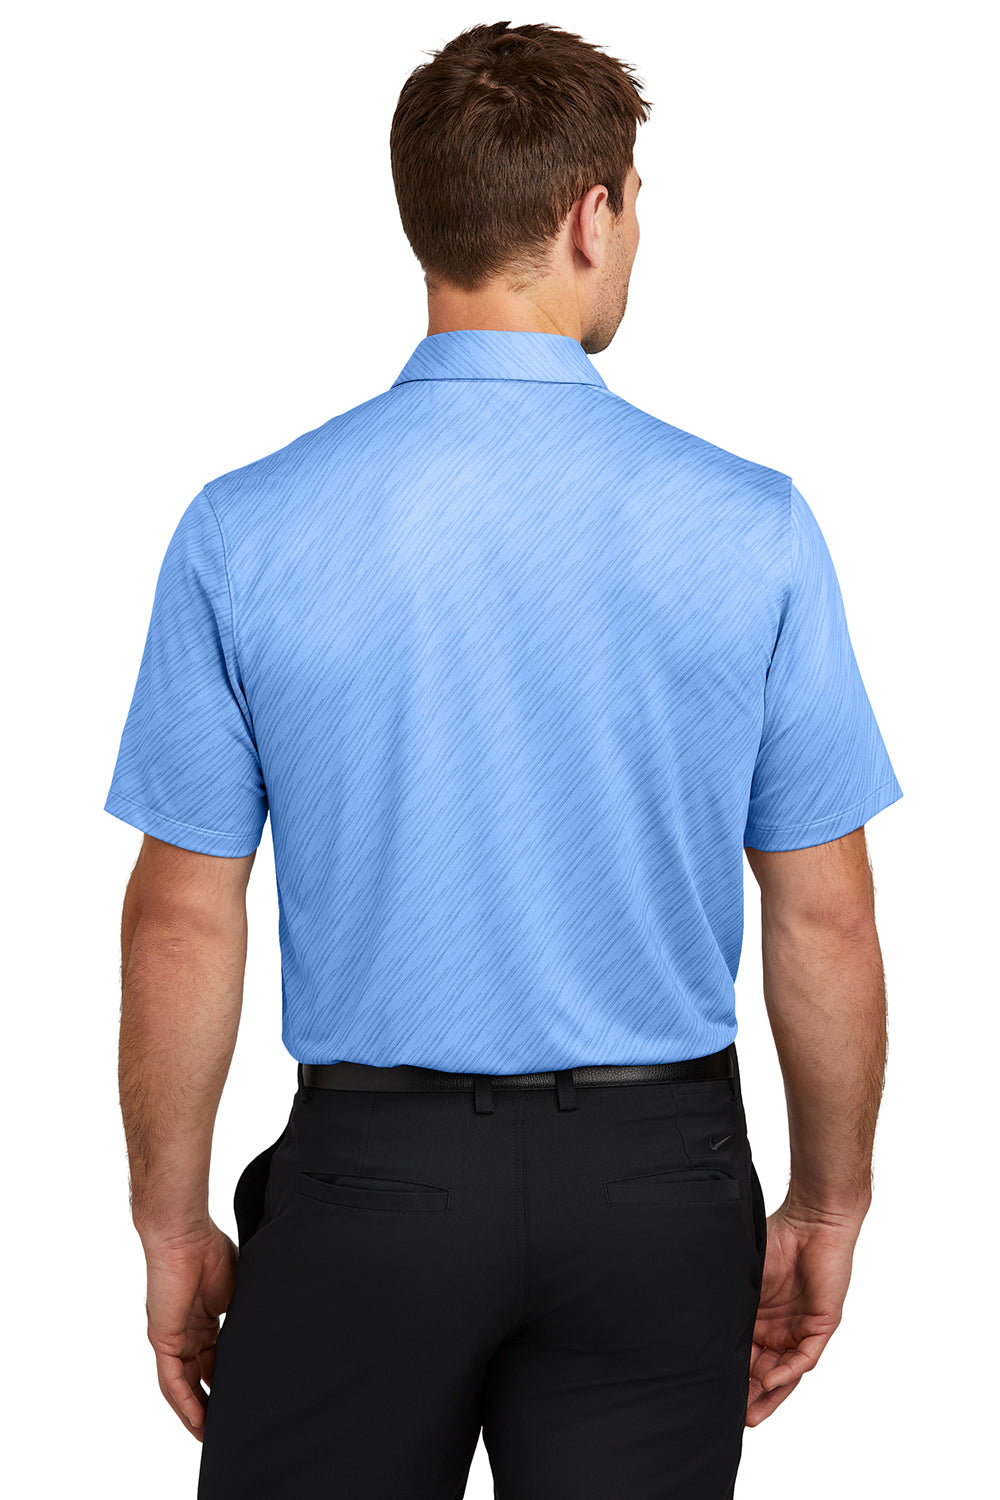 Nike NKDX6688 Mens Vapor Dash Dri-Fit Moisture Wicking Short Sleeve Polo Shirt Valor Blue Model Back